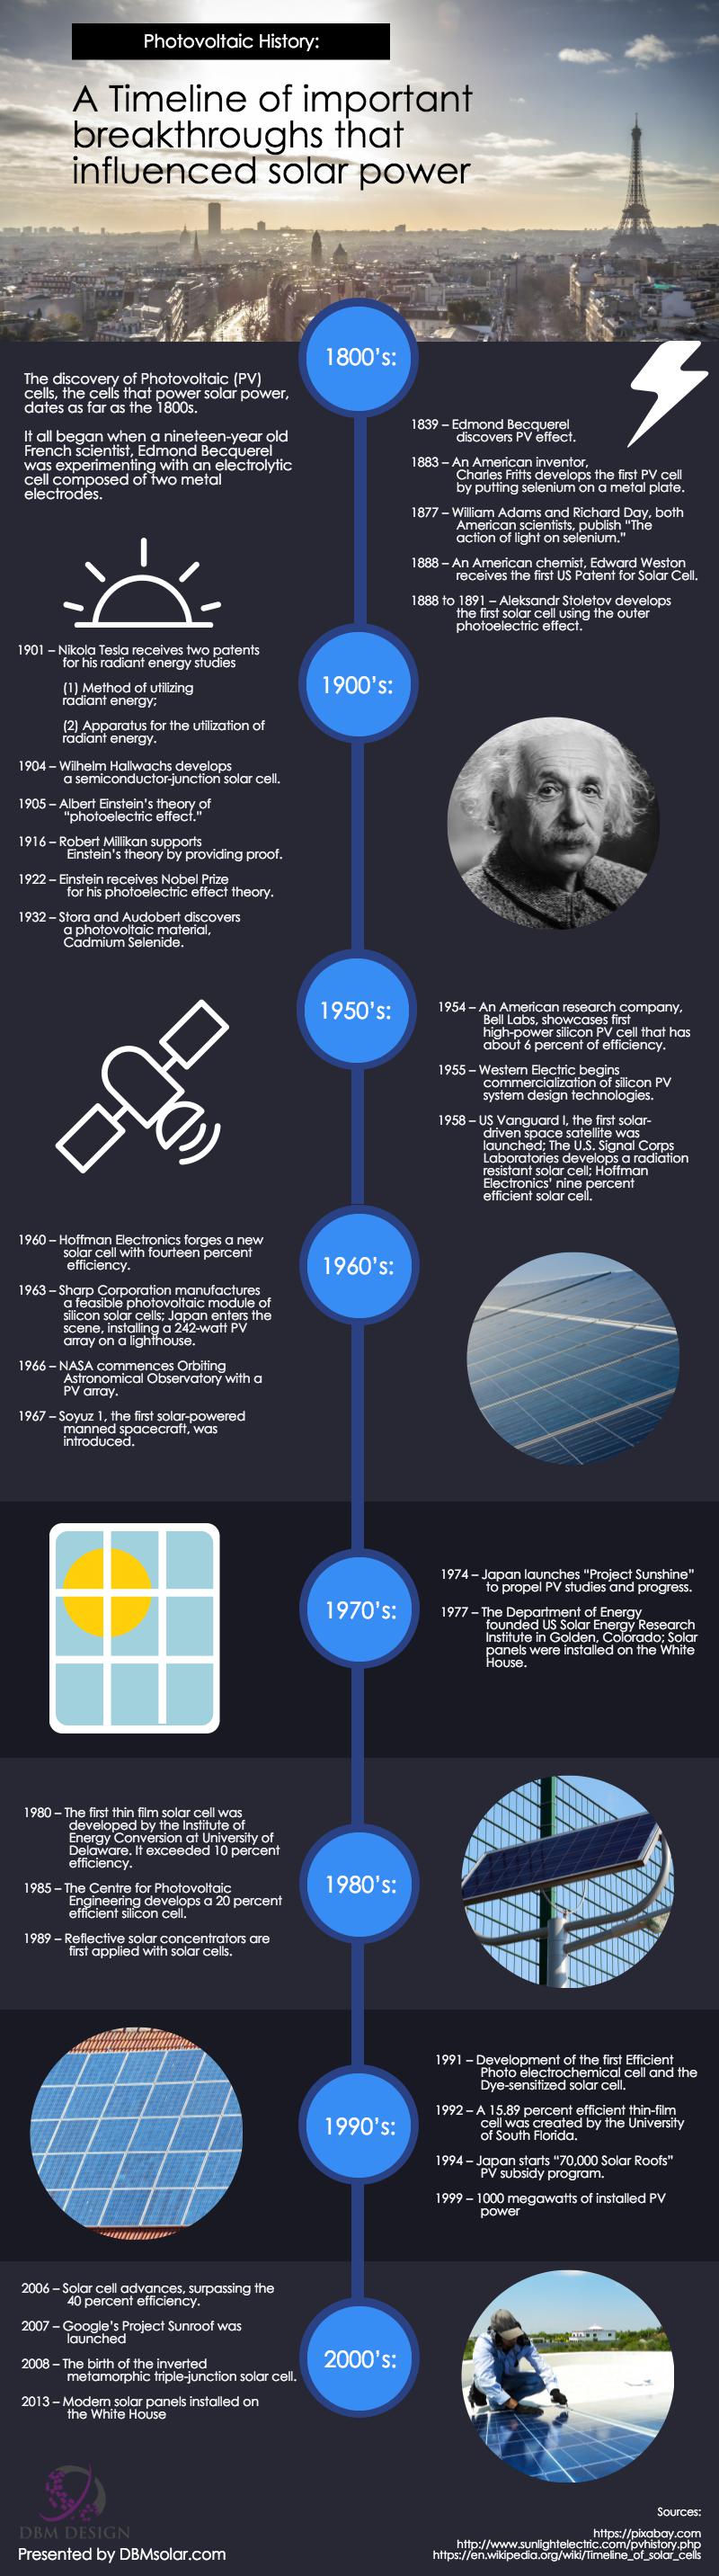 Timeline of Influential Solar Power Breakthroughs